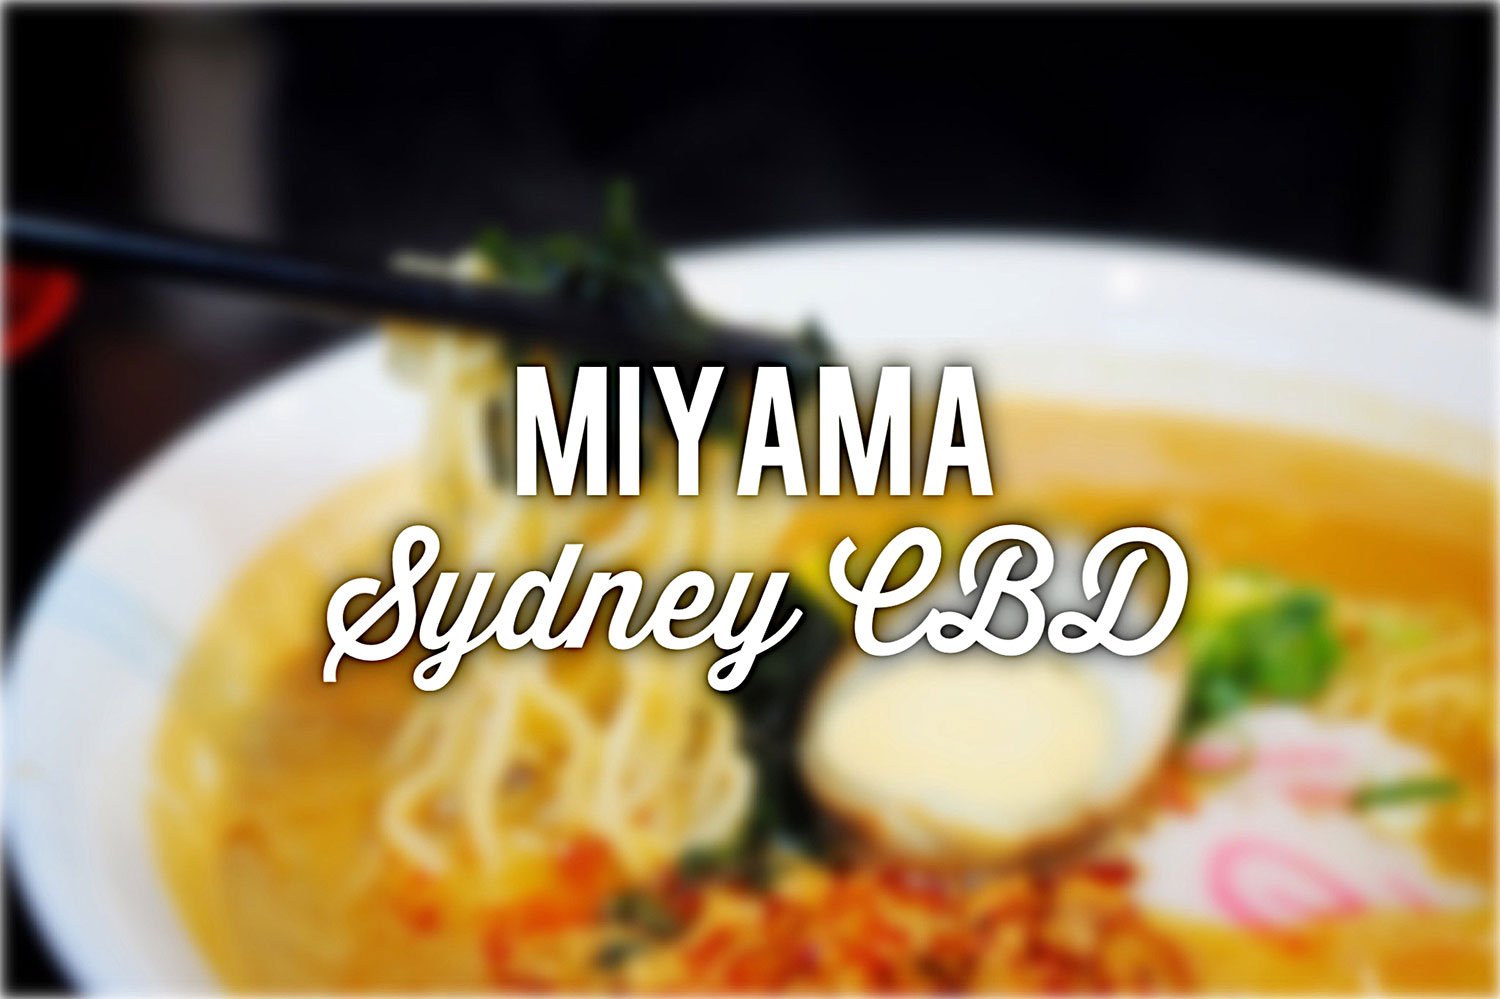 Sydney Food Blog Re view of Miyama, Sydney CBD